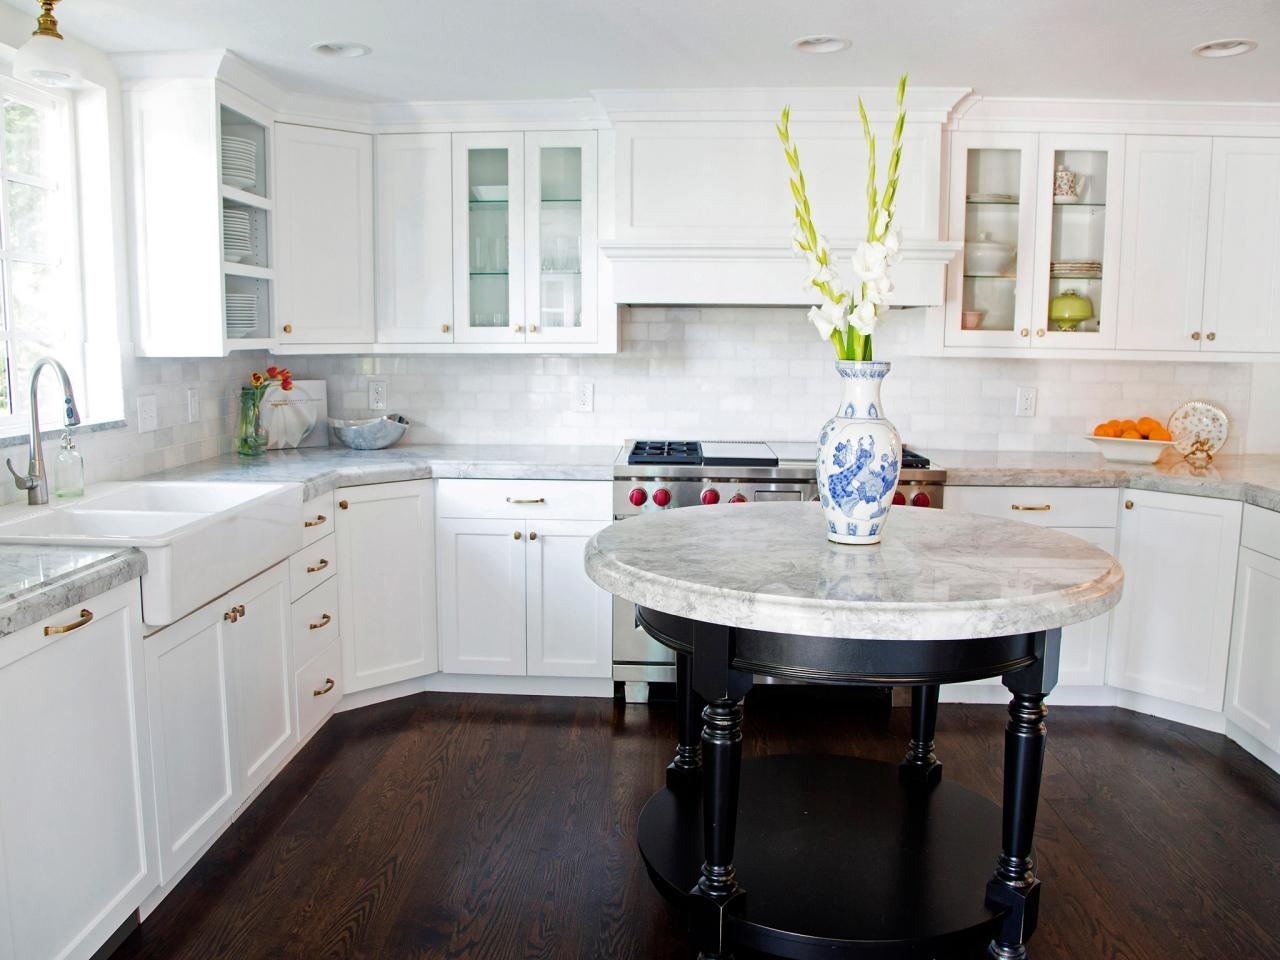 10 Attractive White Cabinet Kitchen Design Ideas %name 2022